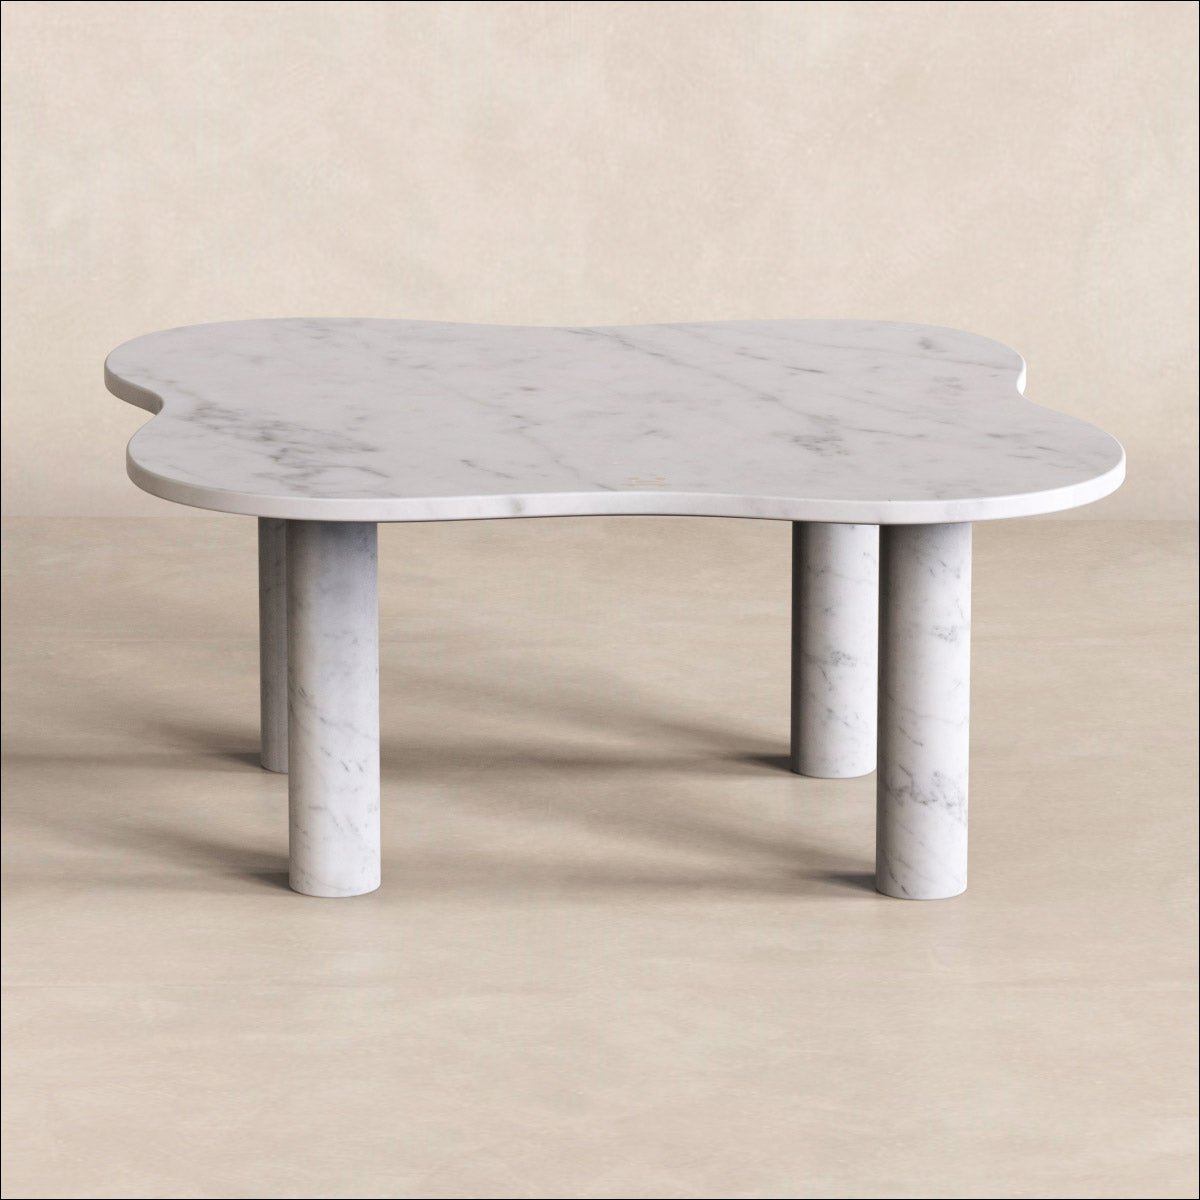 OIXDESIGN LakeMist Coffee Table, Italian Carrara Marble, Micro Scene Graph, Front View